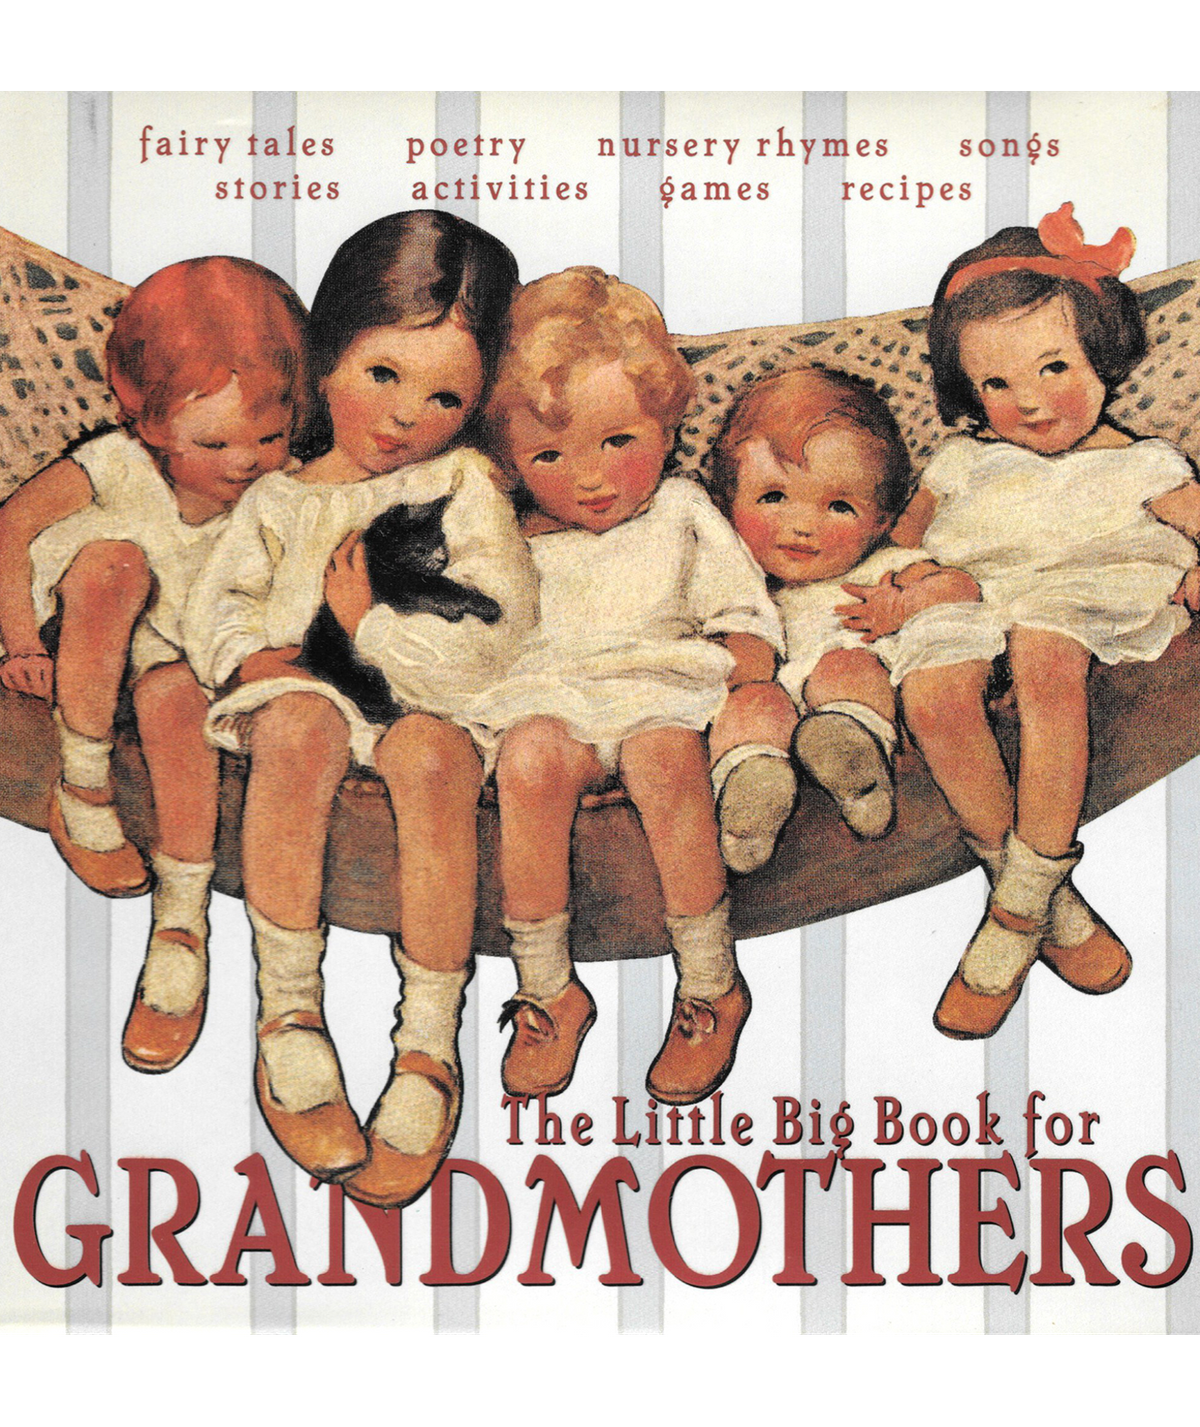 Penis book. A little book for grandma.